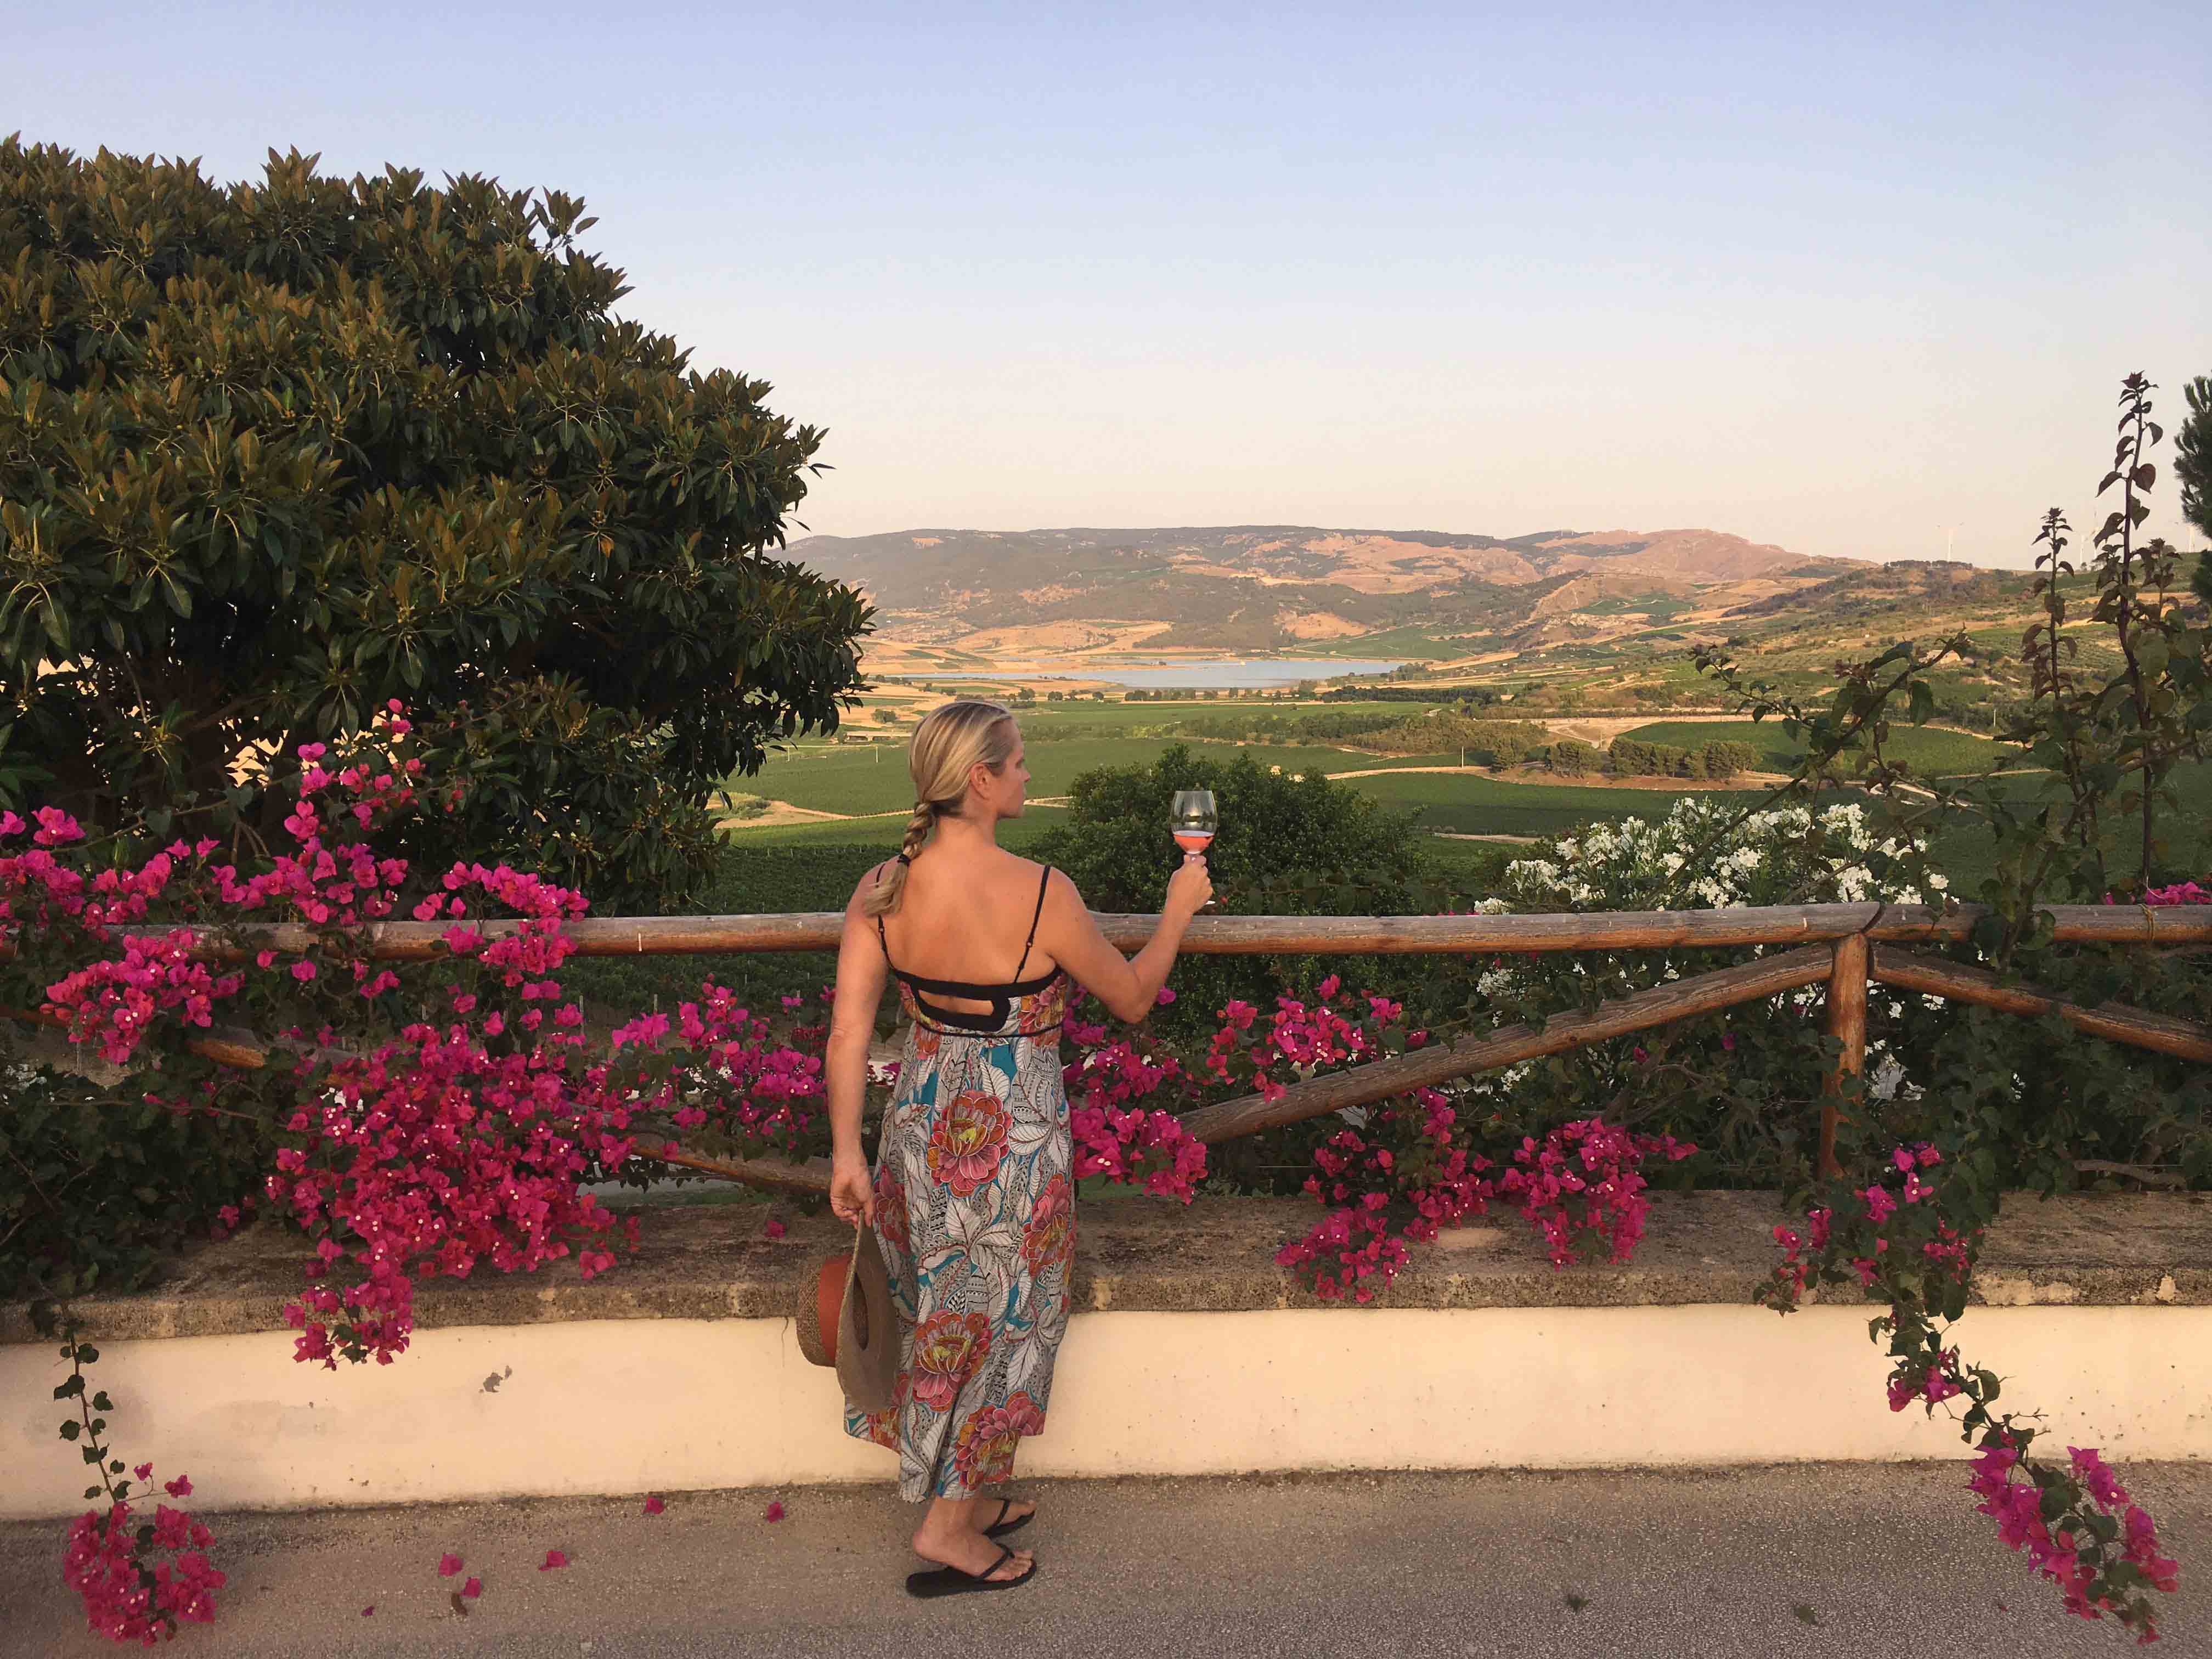 Lauren Mowery raises a glass of rose wine in Sicily.